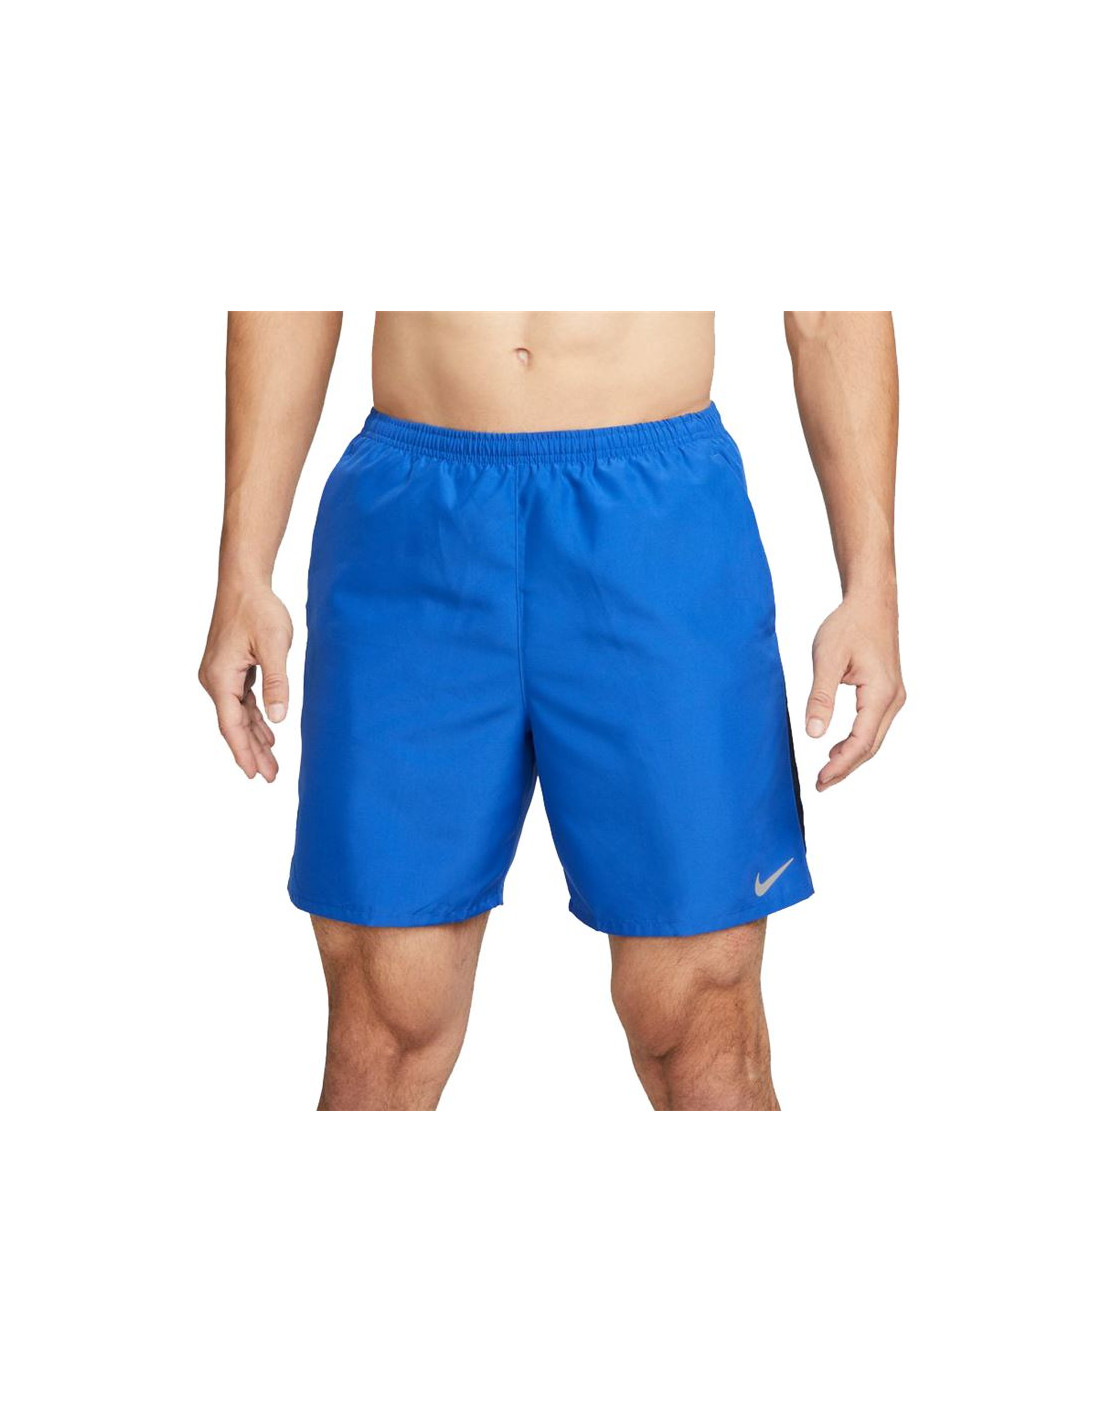 Pantalones de running nike dri-fit hombre azul